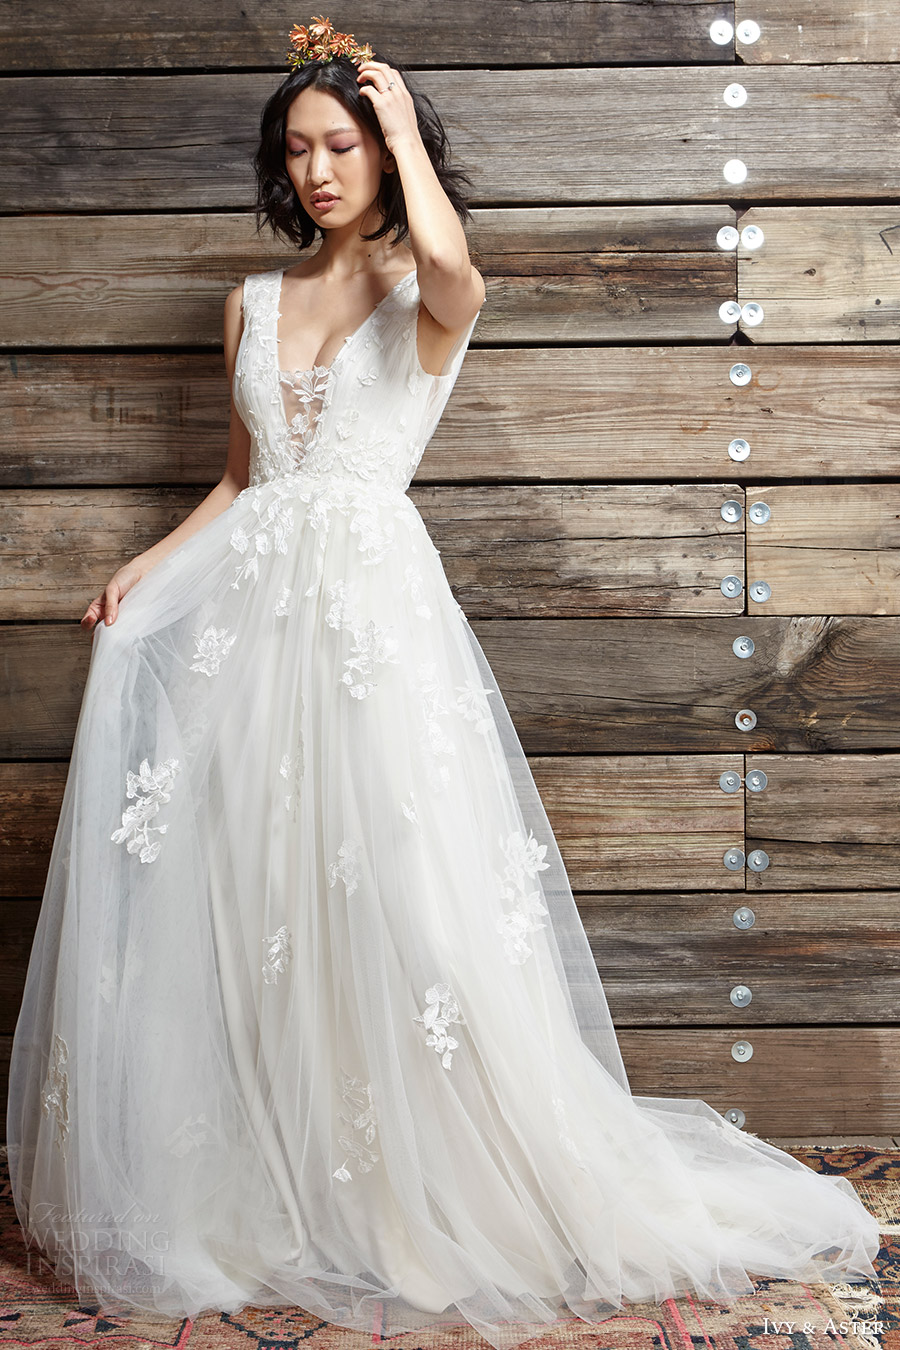 ivy aster bridal spring 2017 sleeveless deep vneck aline wedding dress (daphne) mv